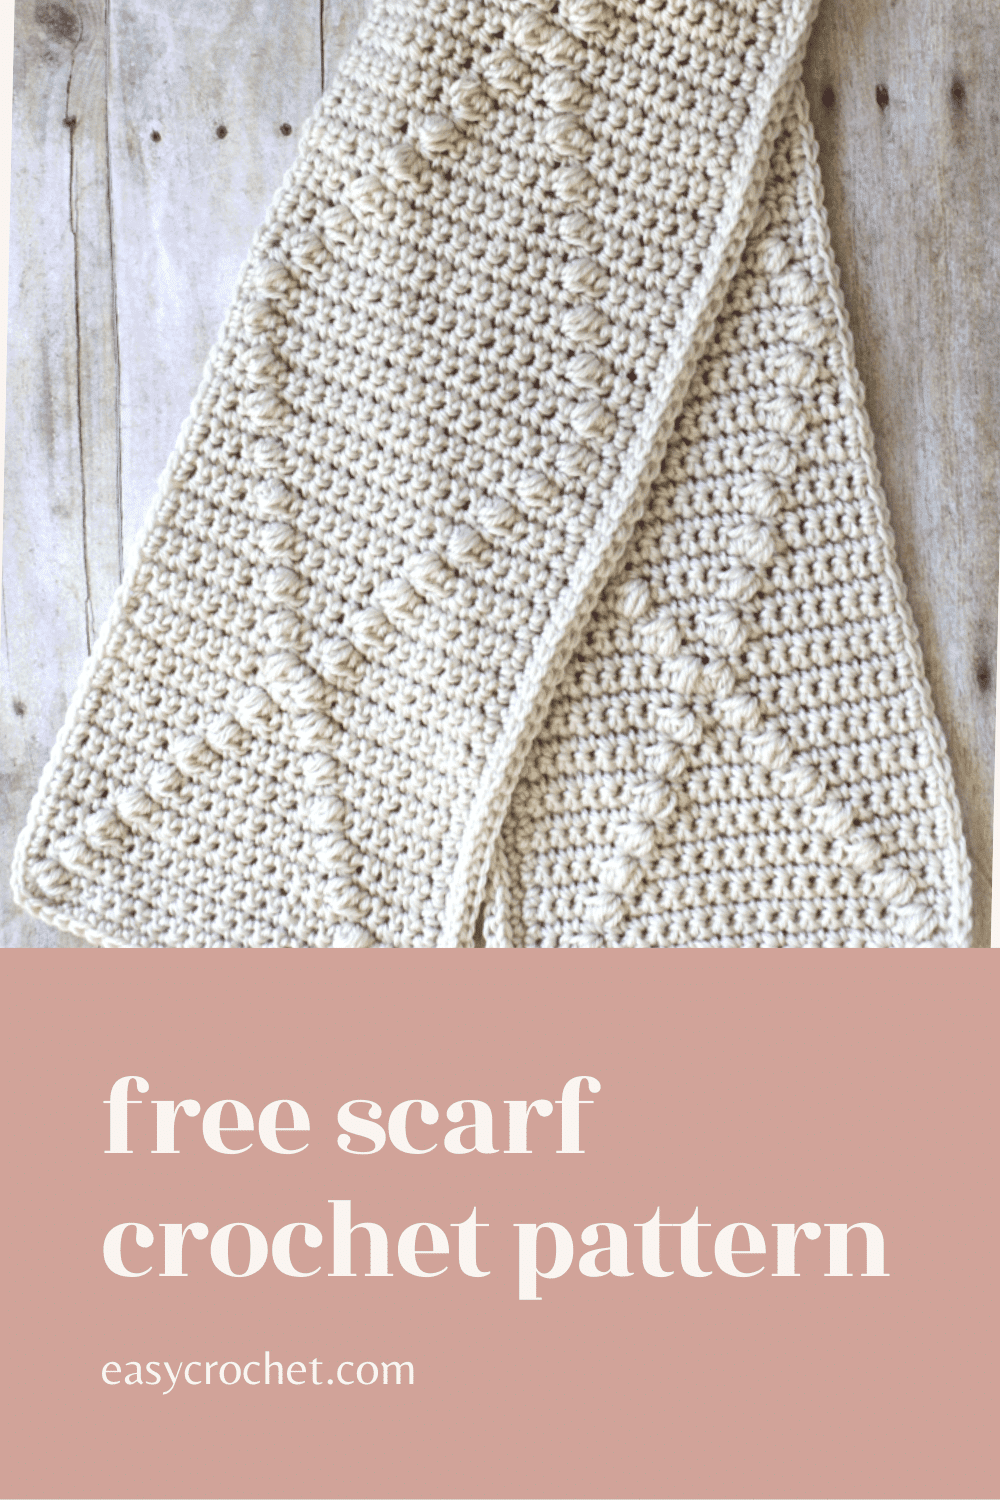 Free Puff Stitch Crochet Scarf Pattern by Easy Crochet via @easycrochetcom